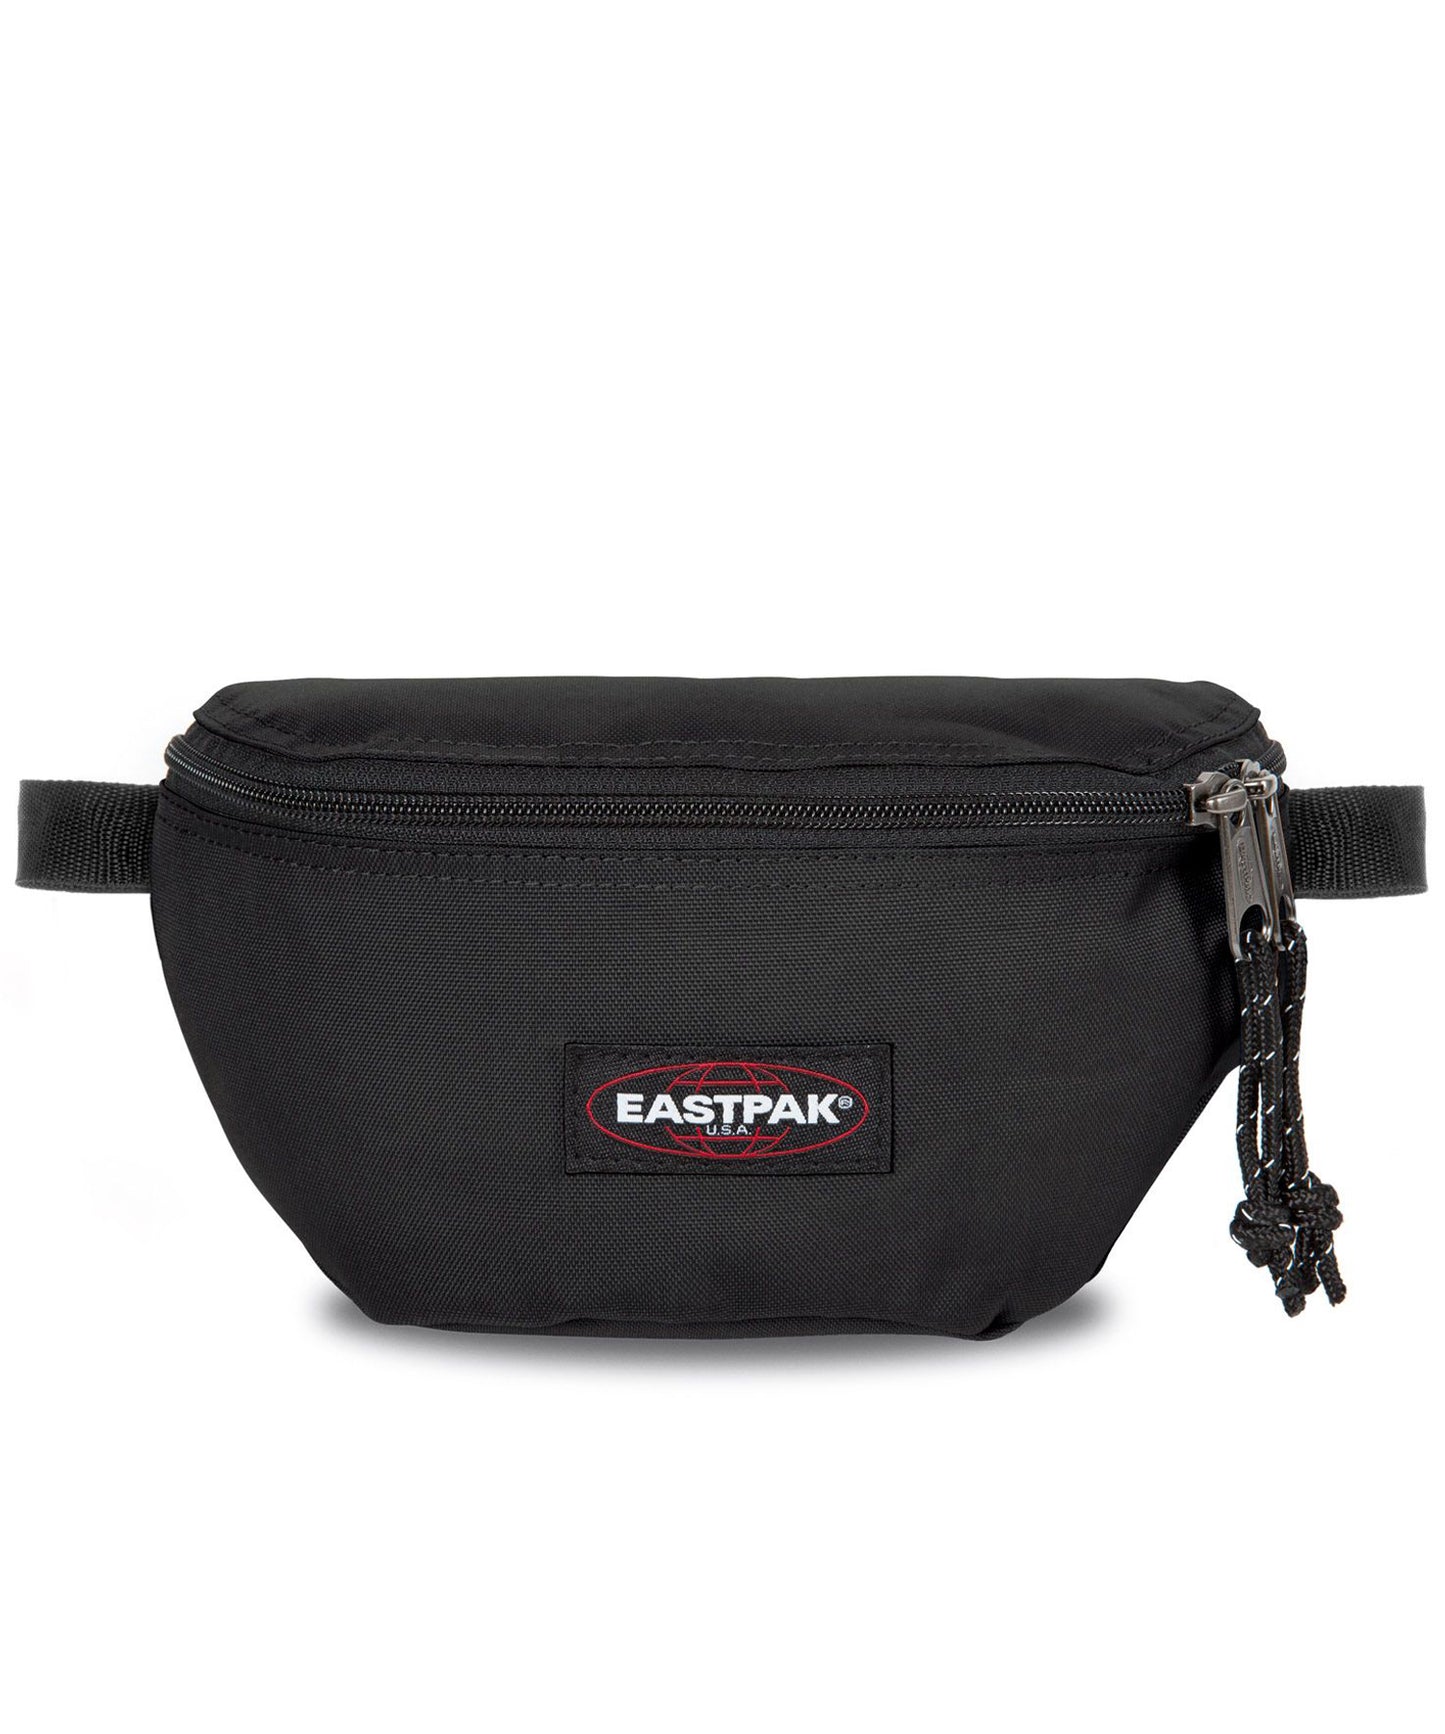 eastpak -springer riñonera black -color negro-bolsillo trasero-cierre cremallera-producto impermeable y vegano..